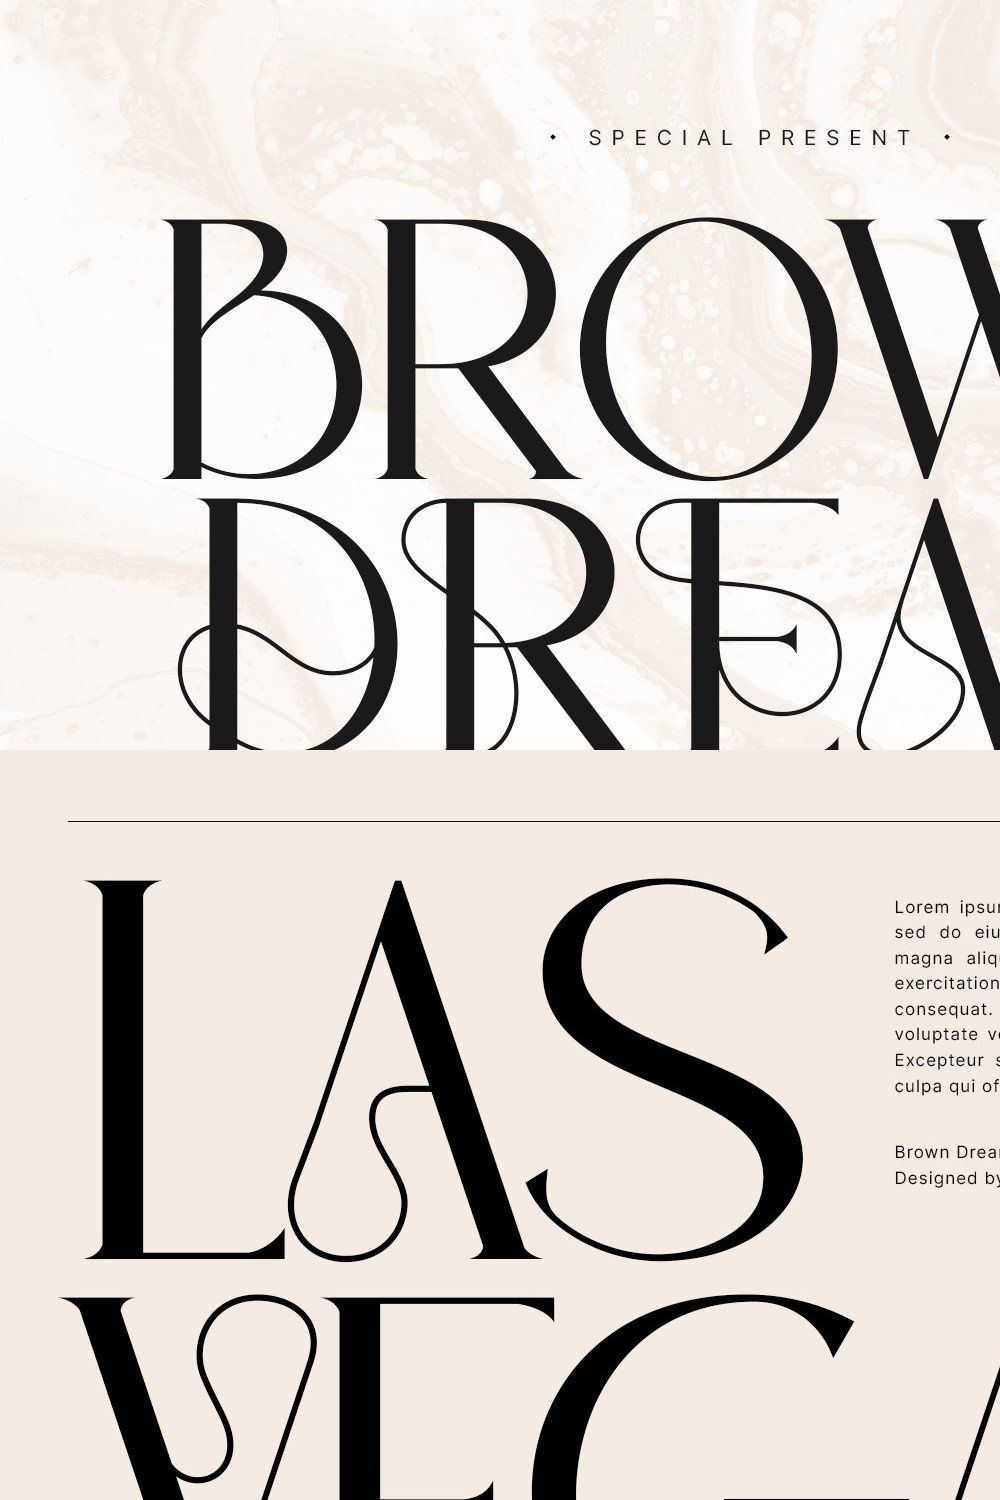 Brown Dream - Modern Stylish Serif pinterest preview image.